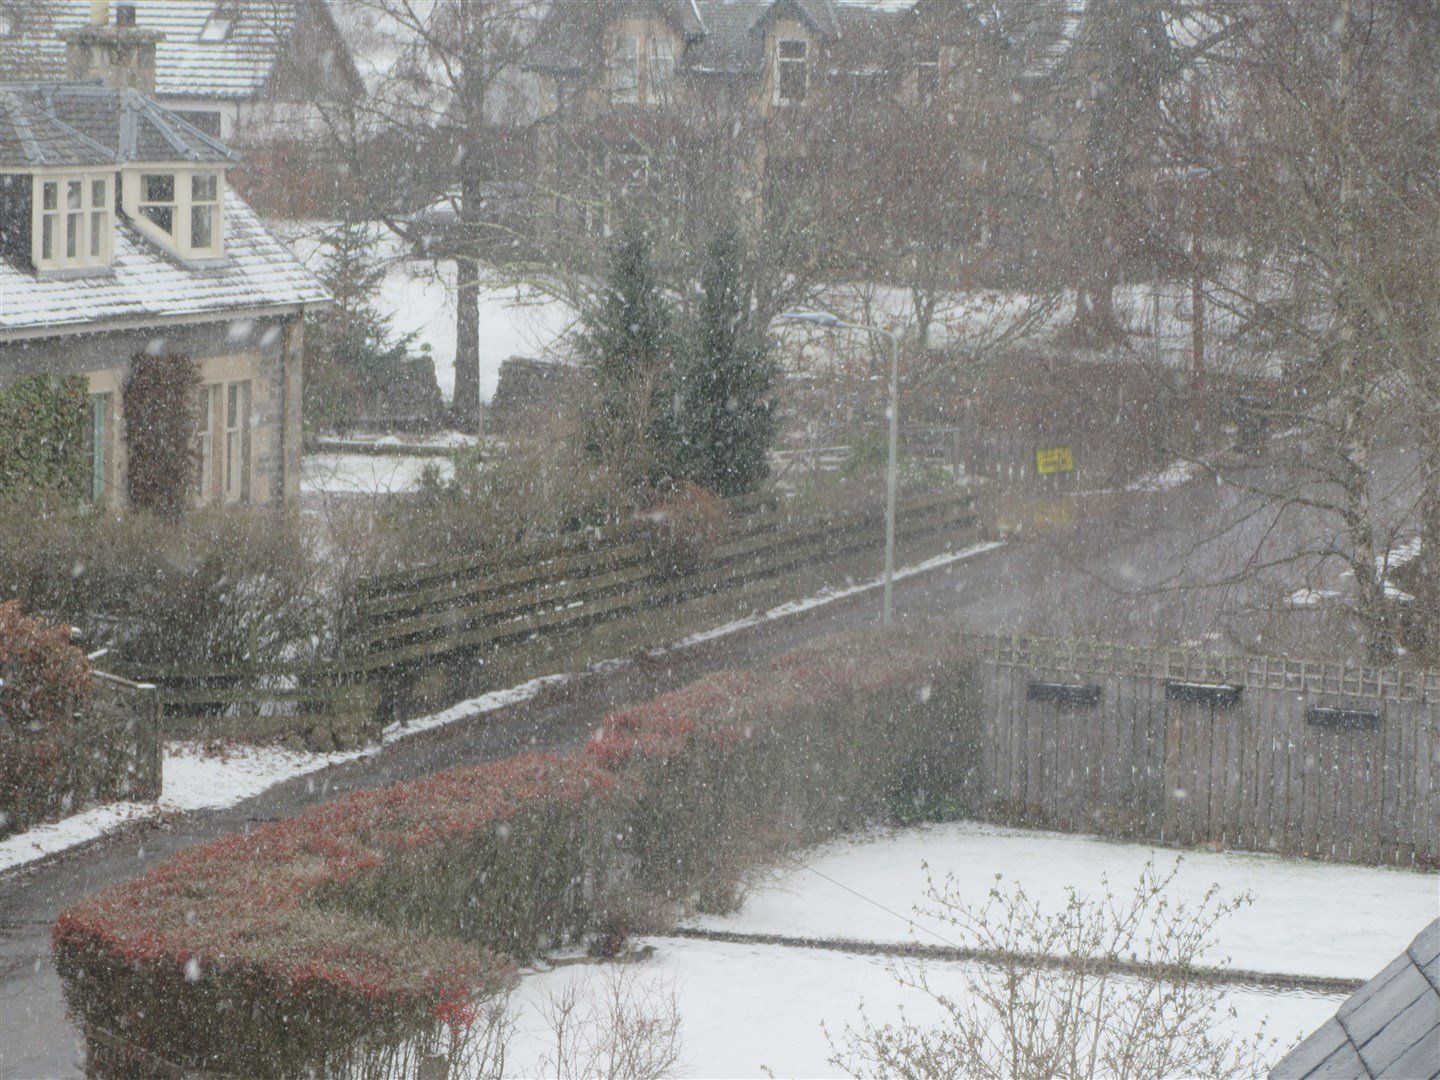 Snow falling on Kincraig this morning